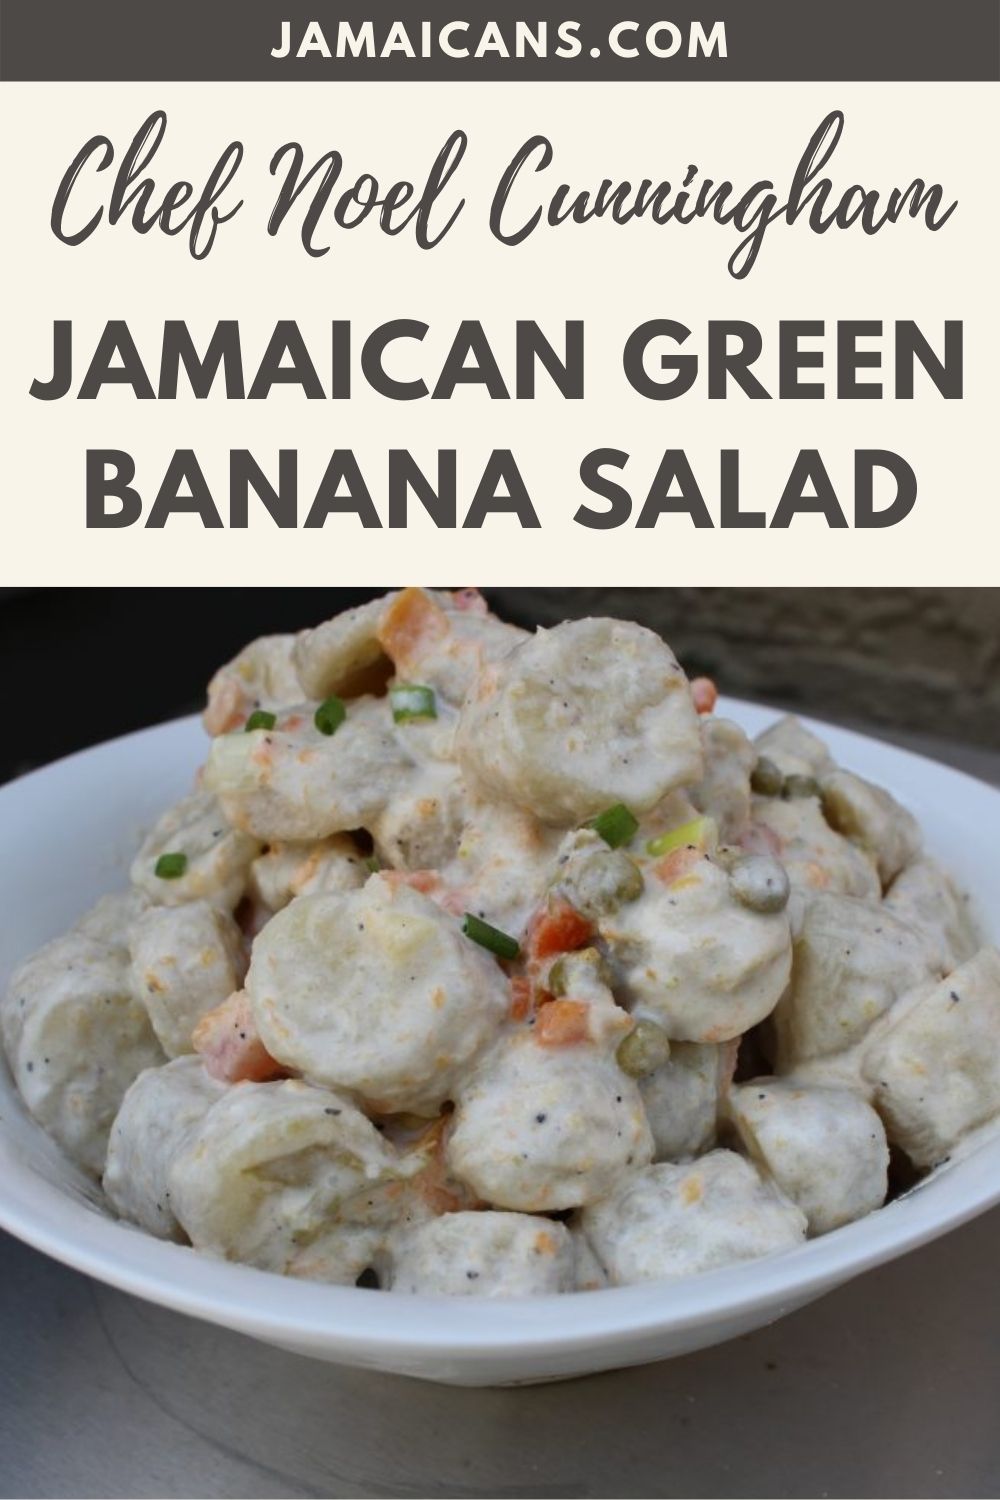 Chef Noel Cunningham Jamaican Green Banana Salad - Jamaicans.com